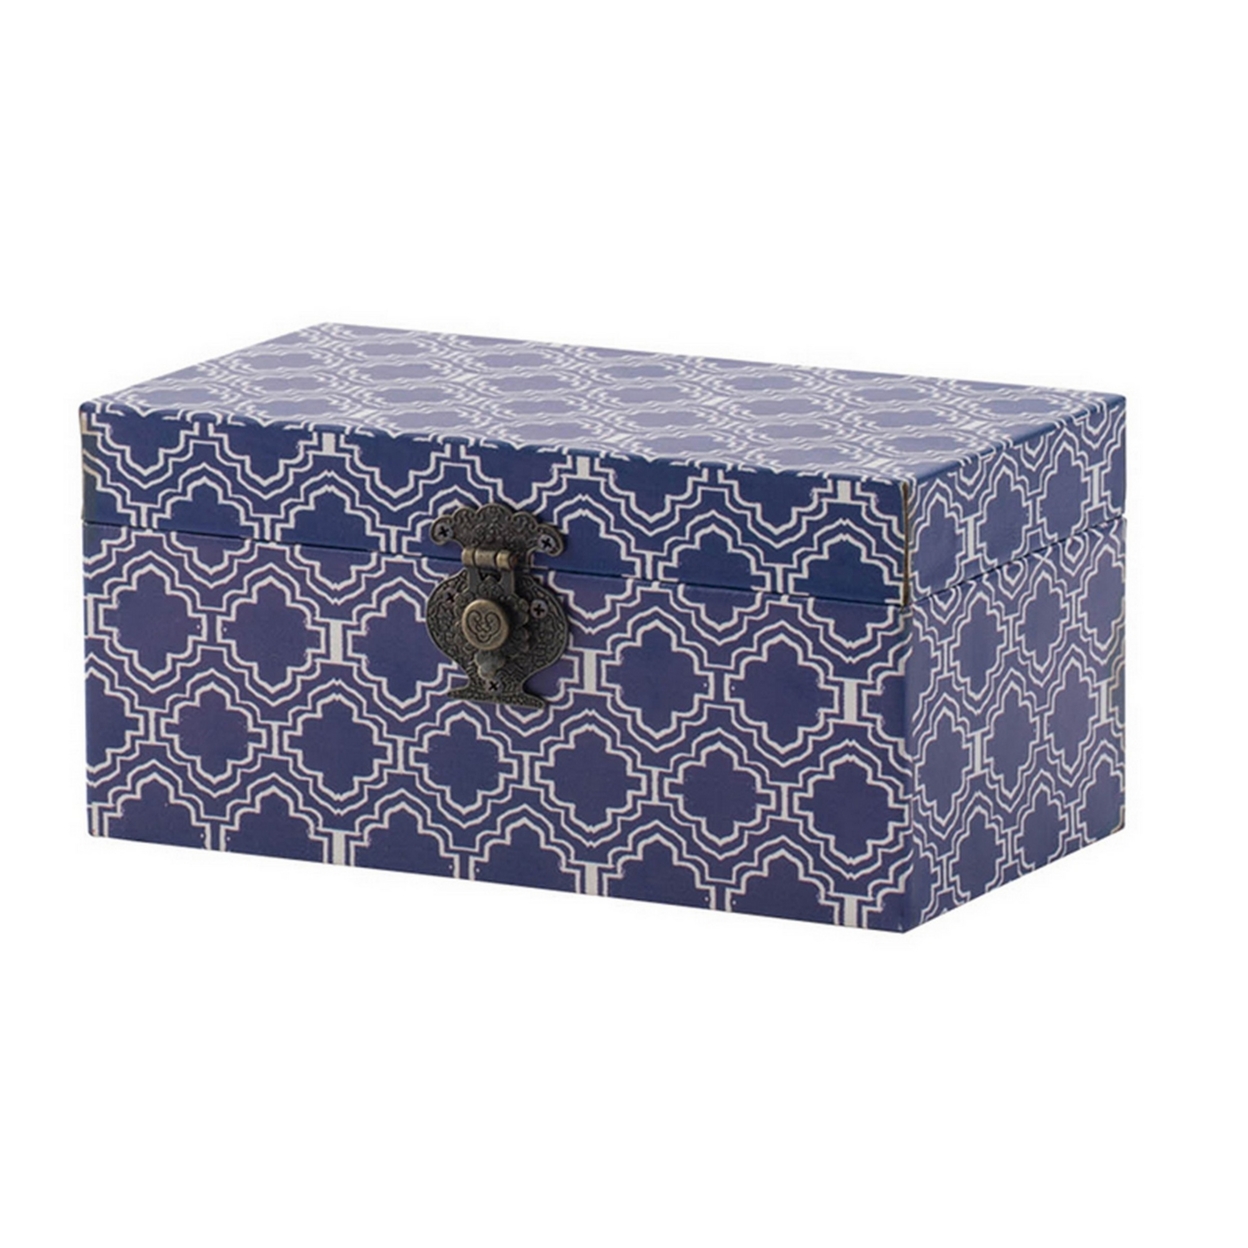 12, 10 Inch Wood Boxes, Classic Blue And White Quatrefoil Design, Set Of 2- Saltoro Sherpi